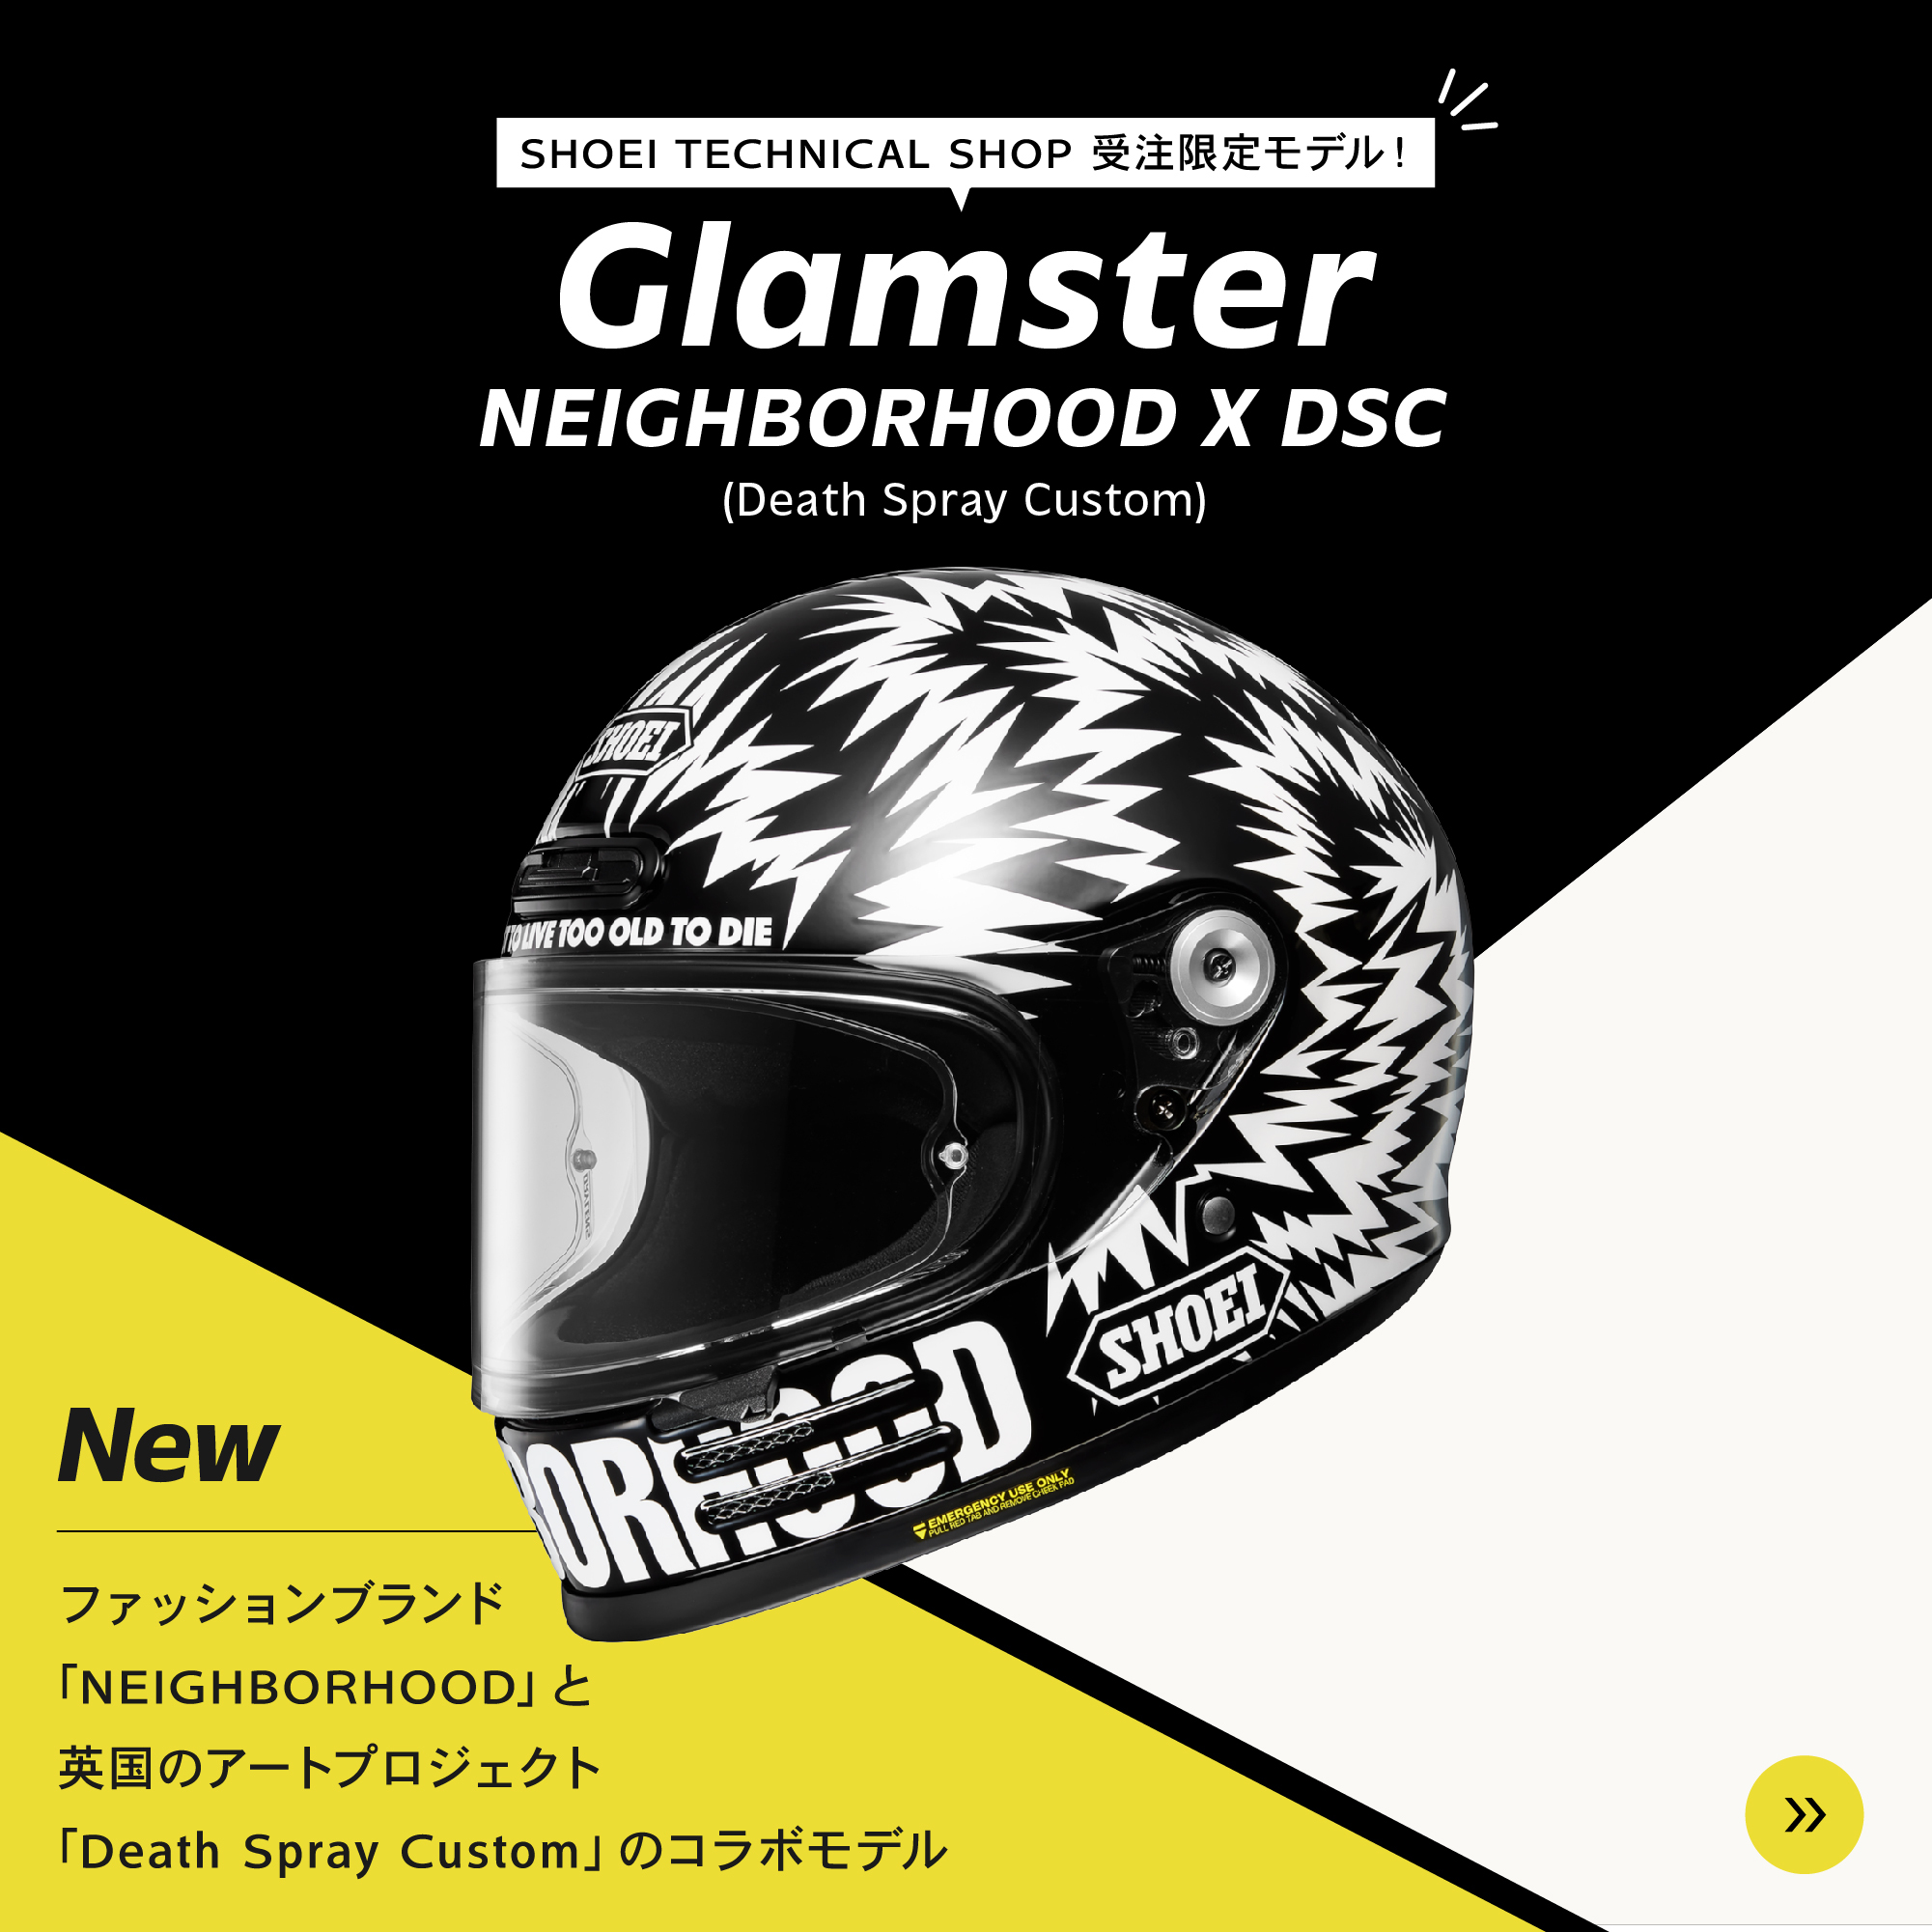 SHOEI Glamster NEIGHBORHOOD X DSC 樂高帽限量商品